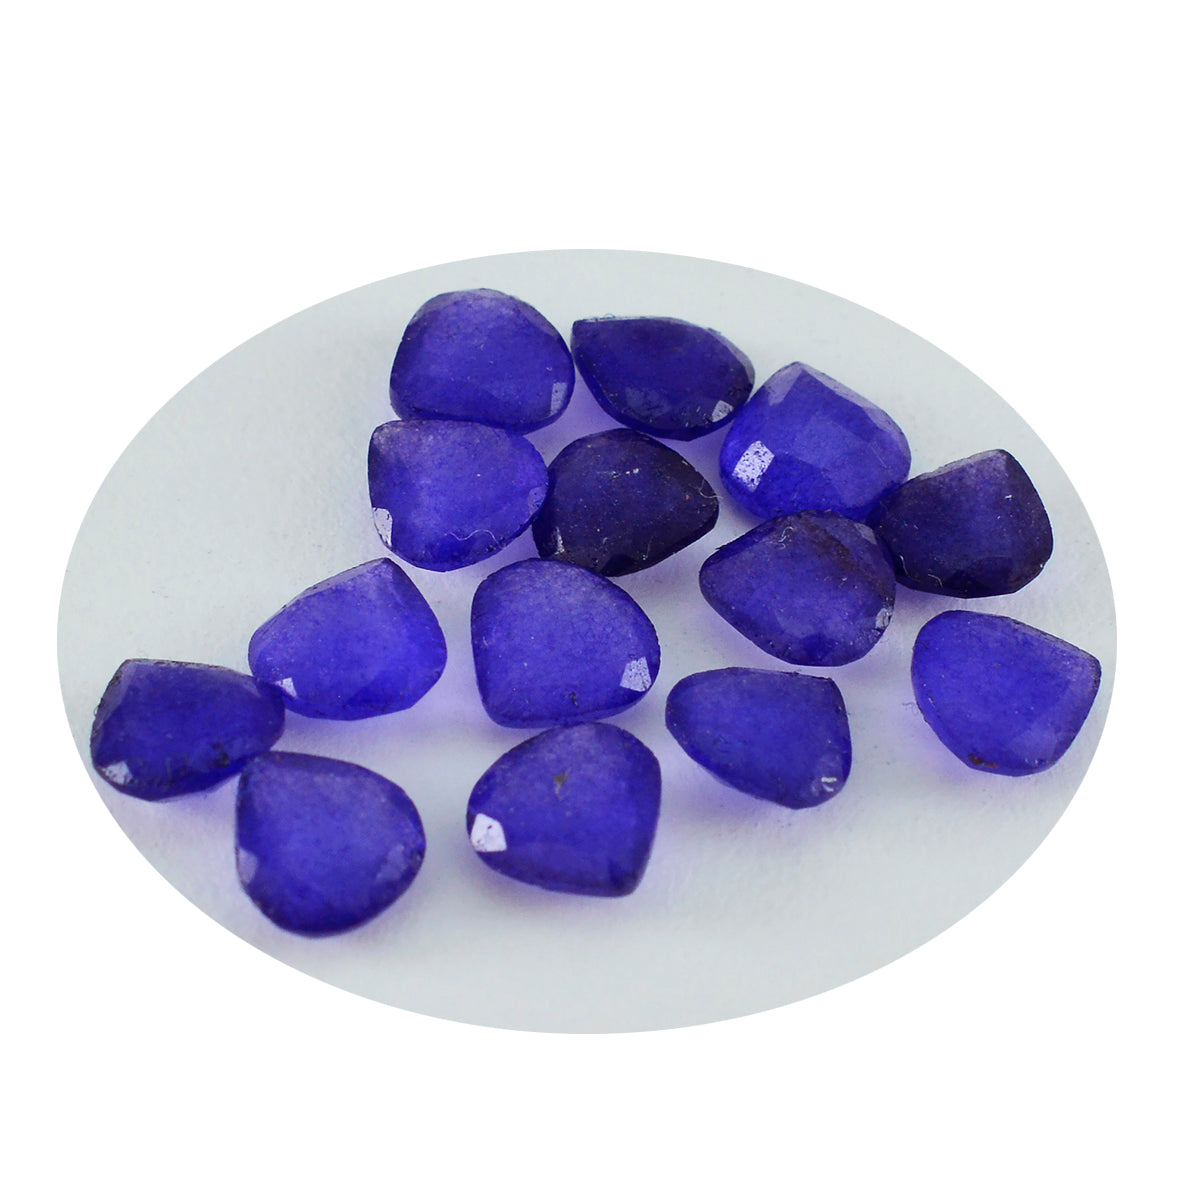 Riyogems 1PC Real Blue Jasper Faceted 7x7 mm Heart Shape fantastic Quality Loose Gemstone